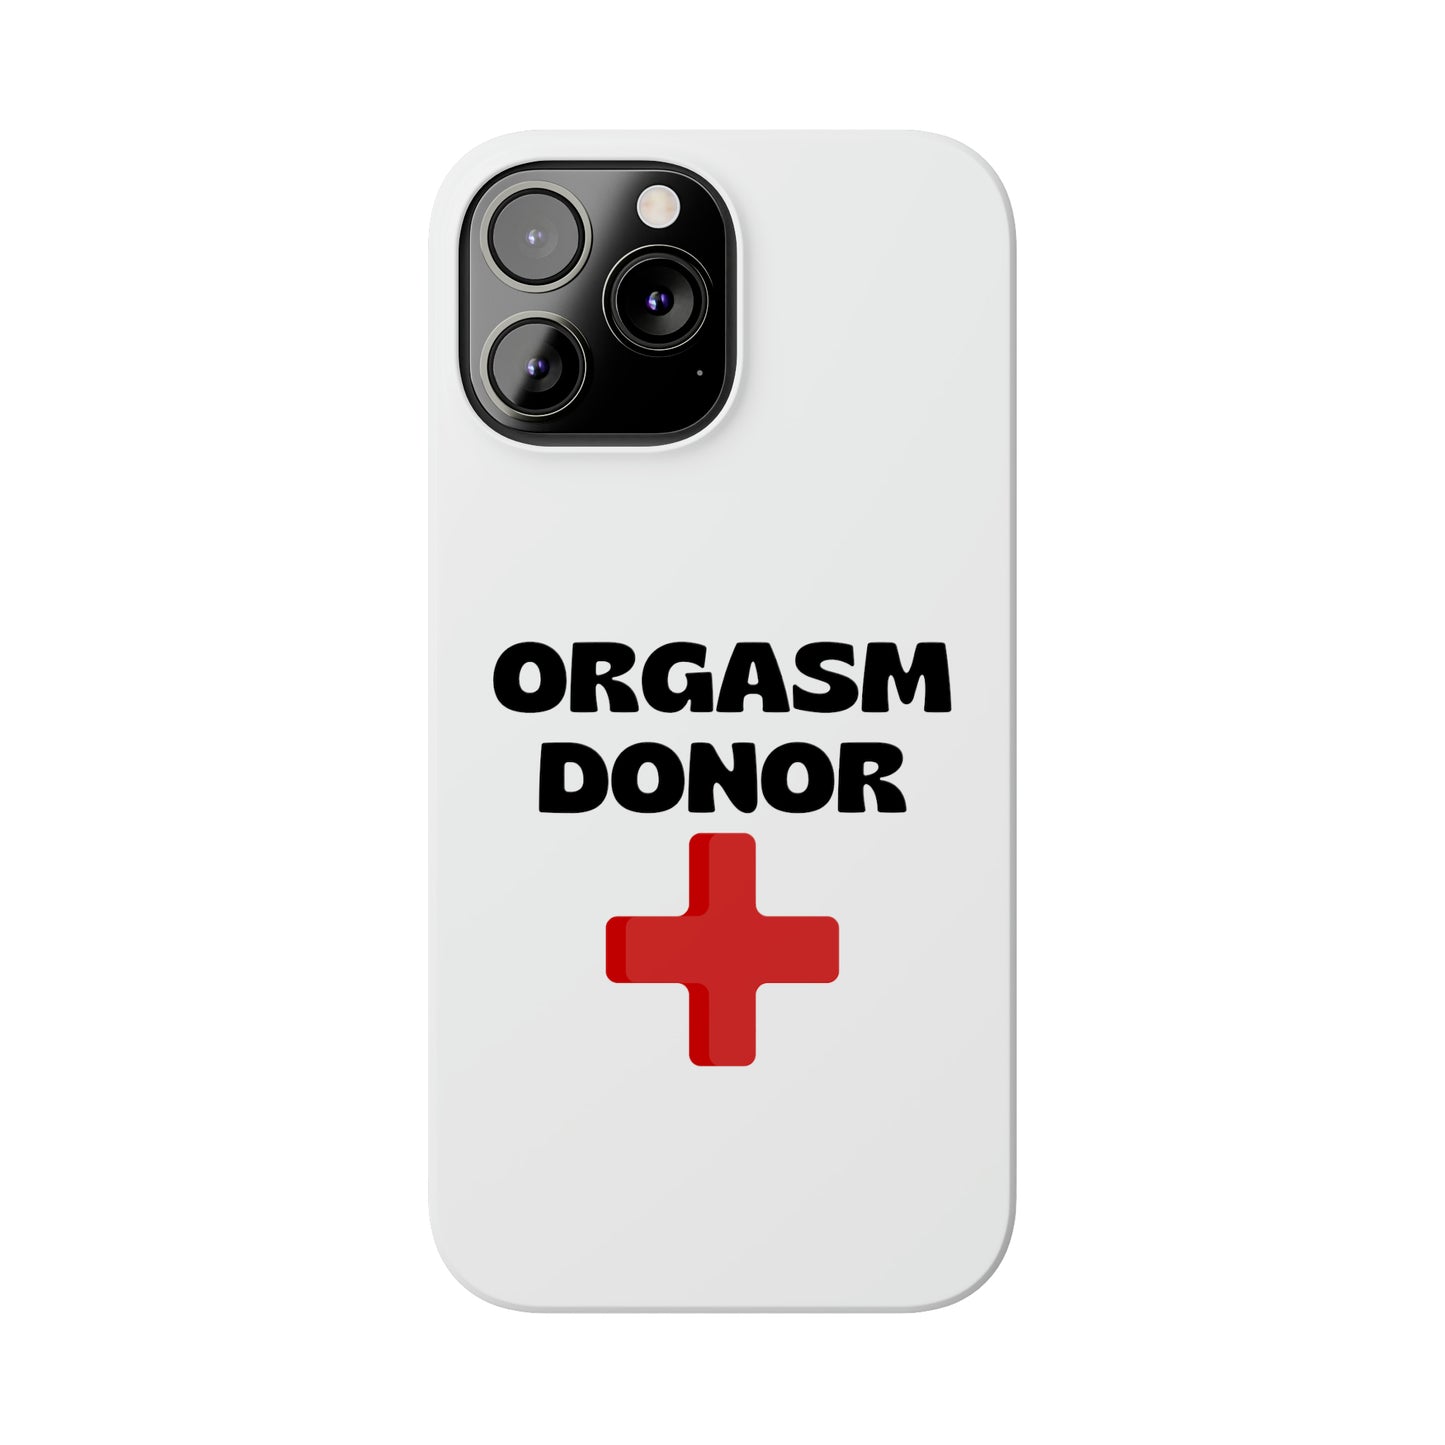 Orgasm Donor iPhone Case